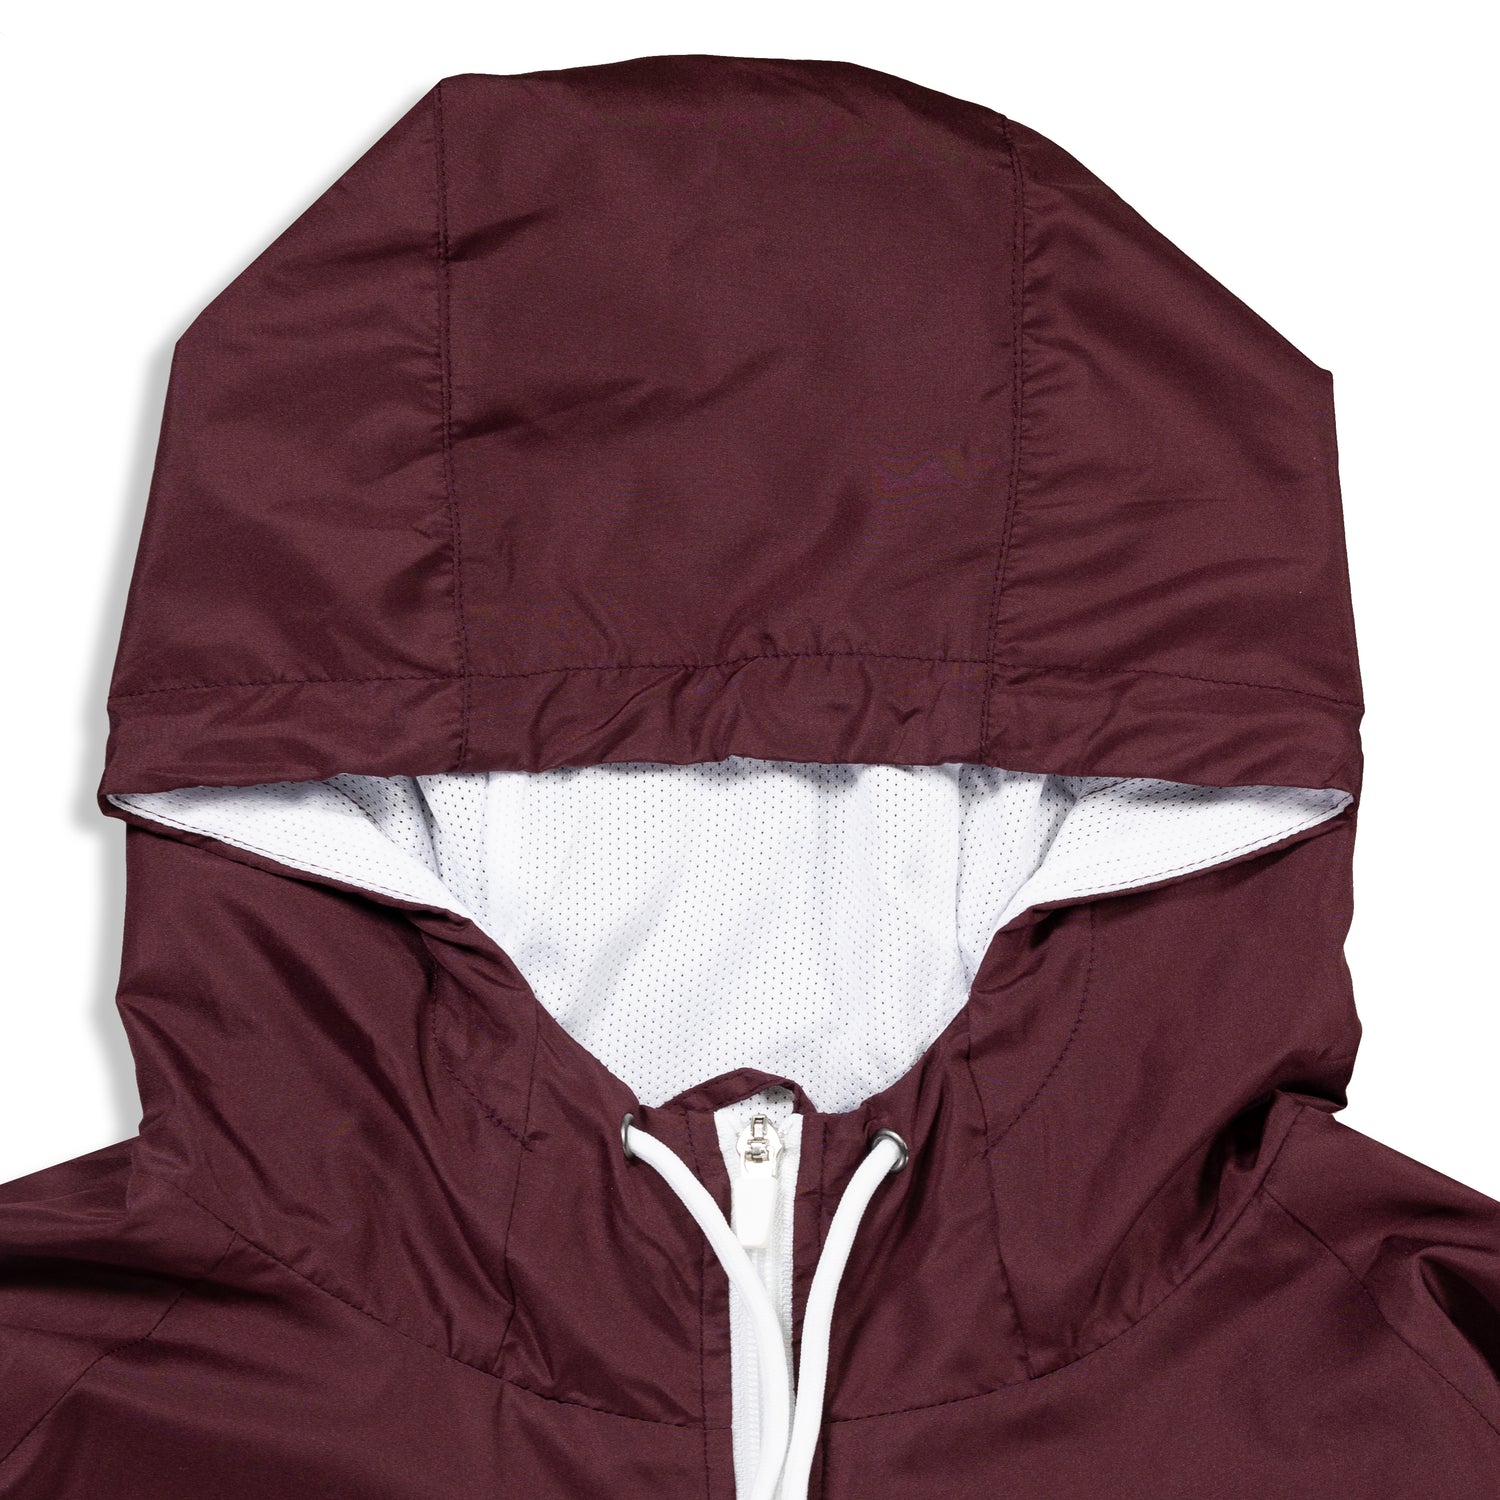 Full Zip Hooded Rain Jacket